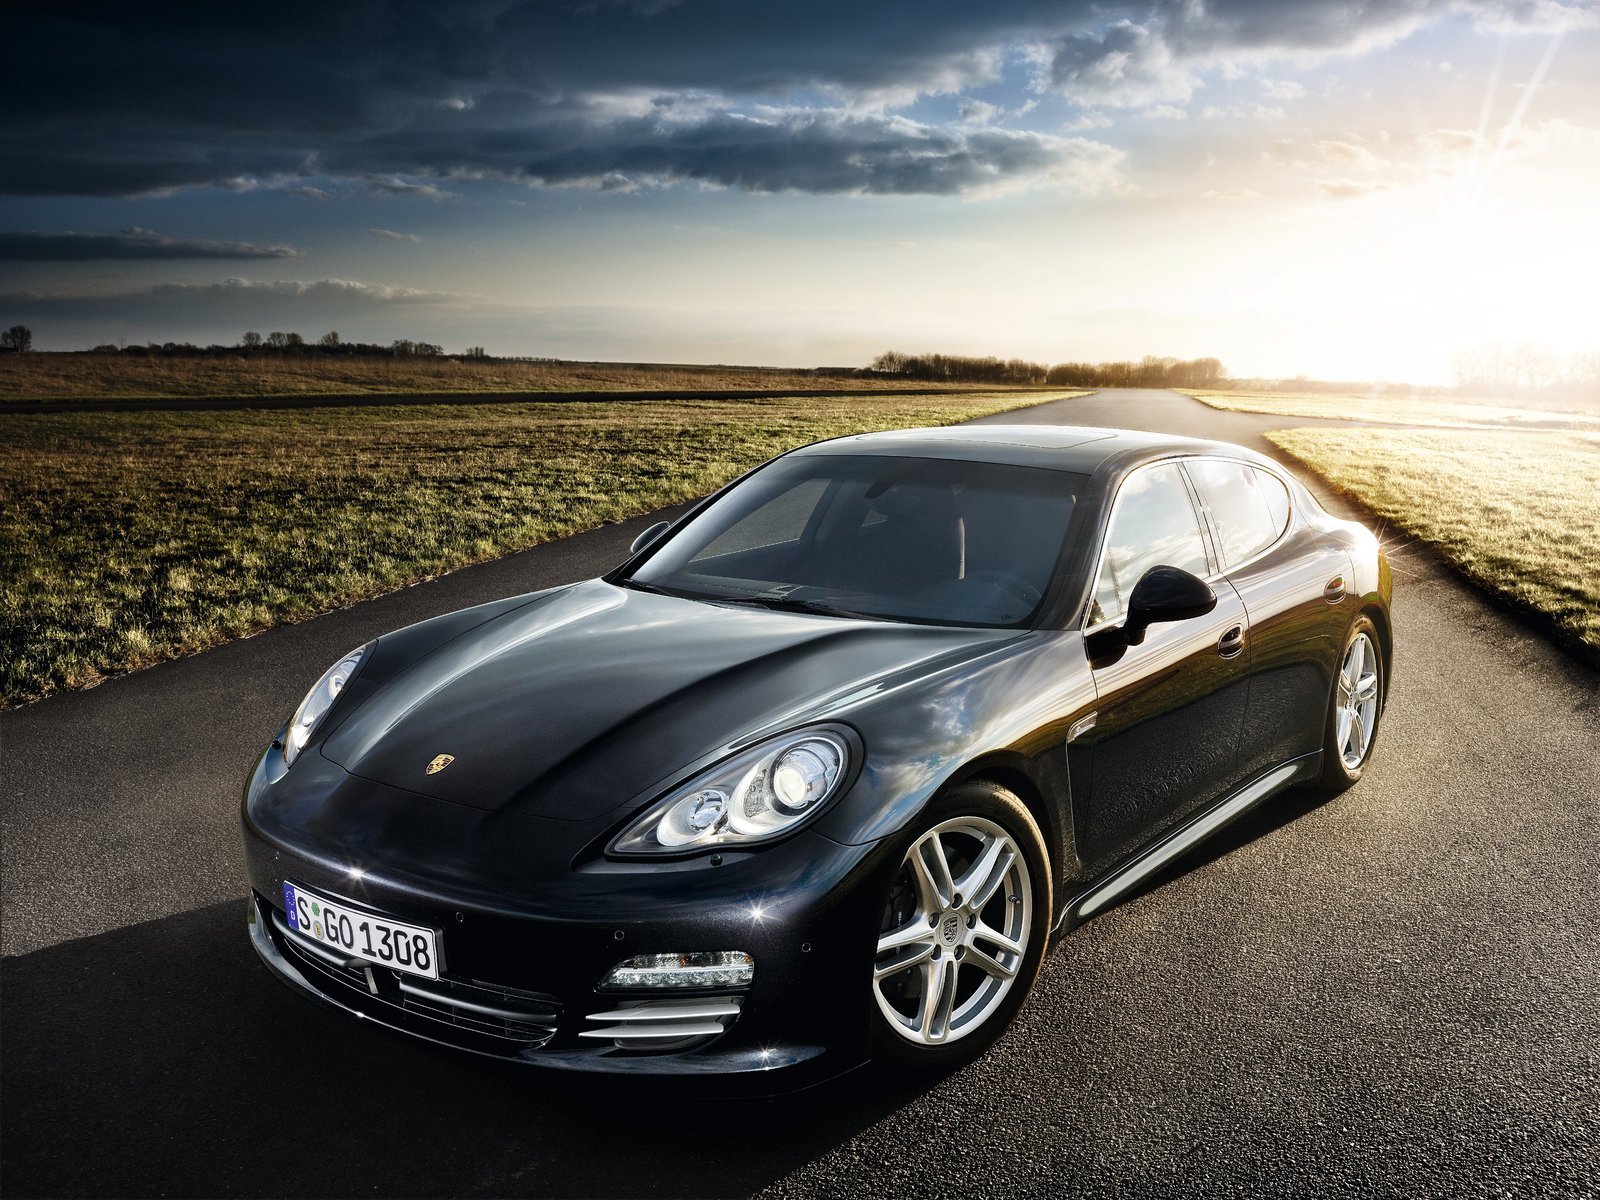 2011 Porsche Panamera V6s On Sale In U.S. Starting June 5